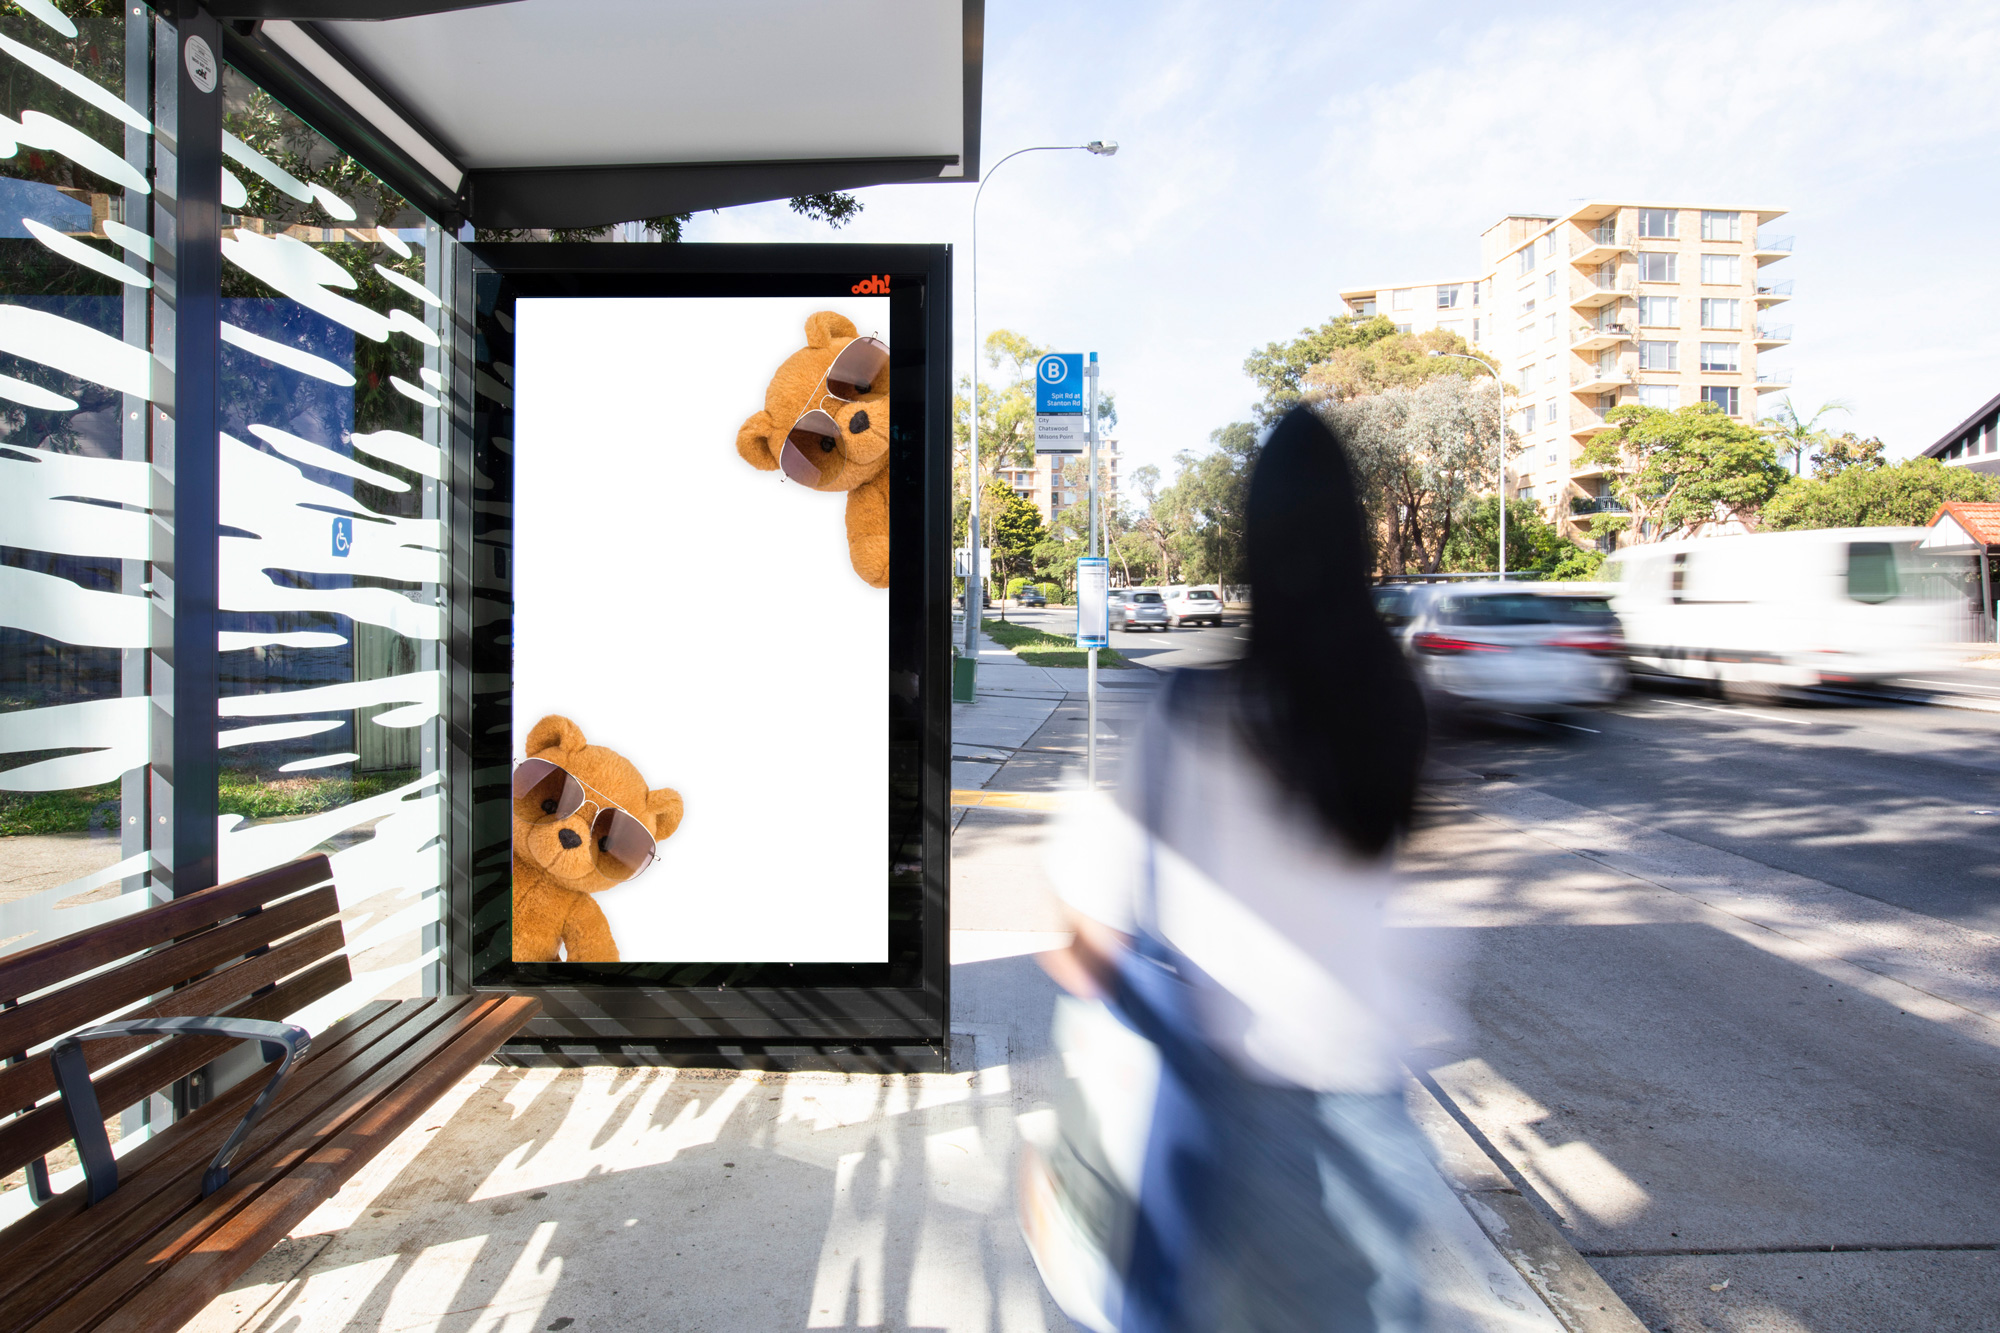 Teddy Bear Hunt street furniture advertising on bus shelter